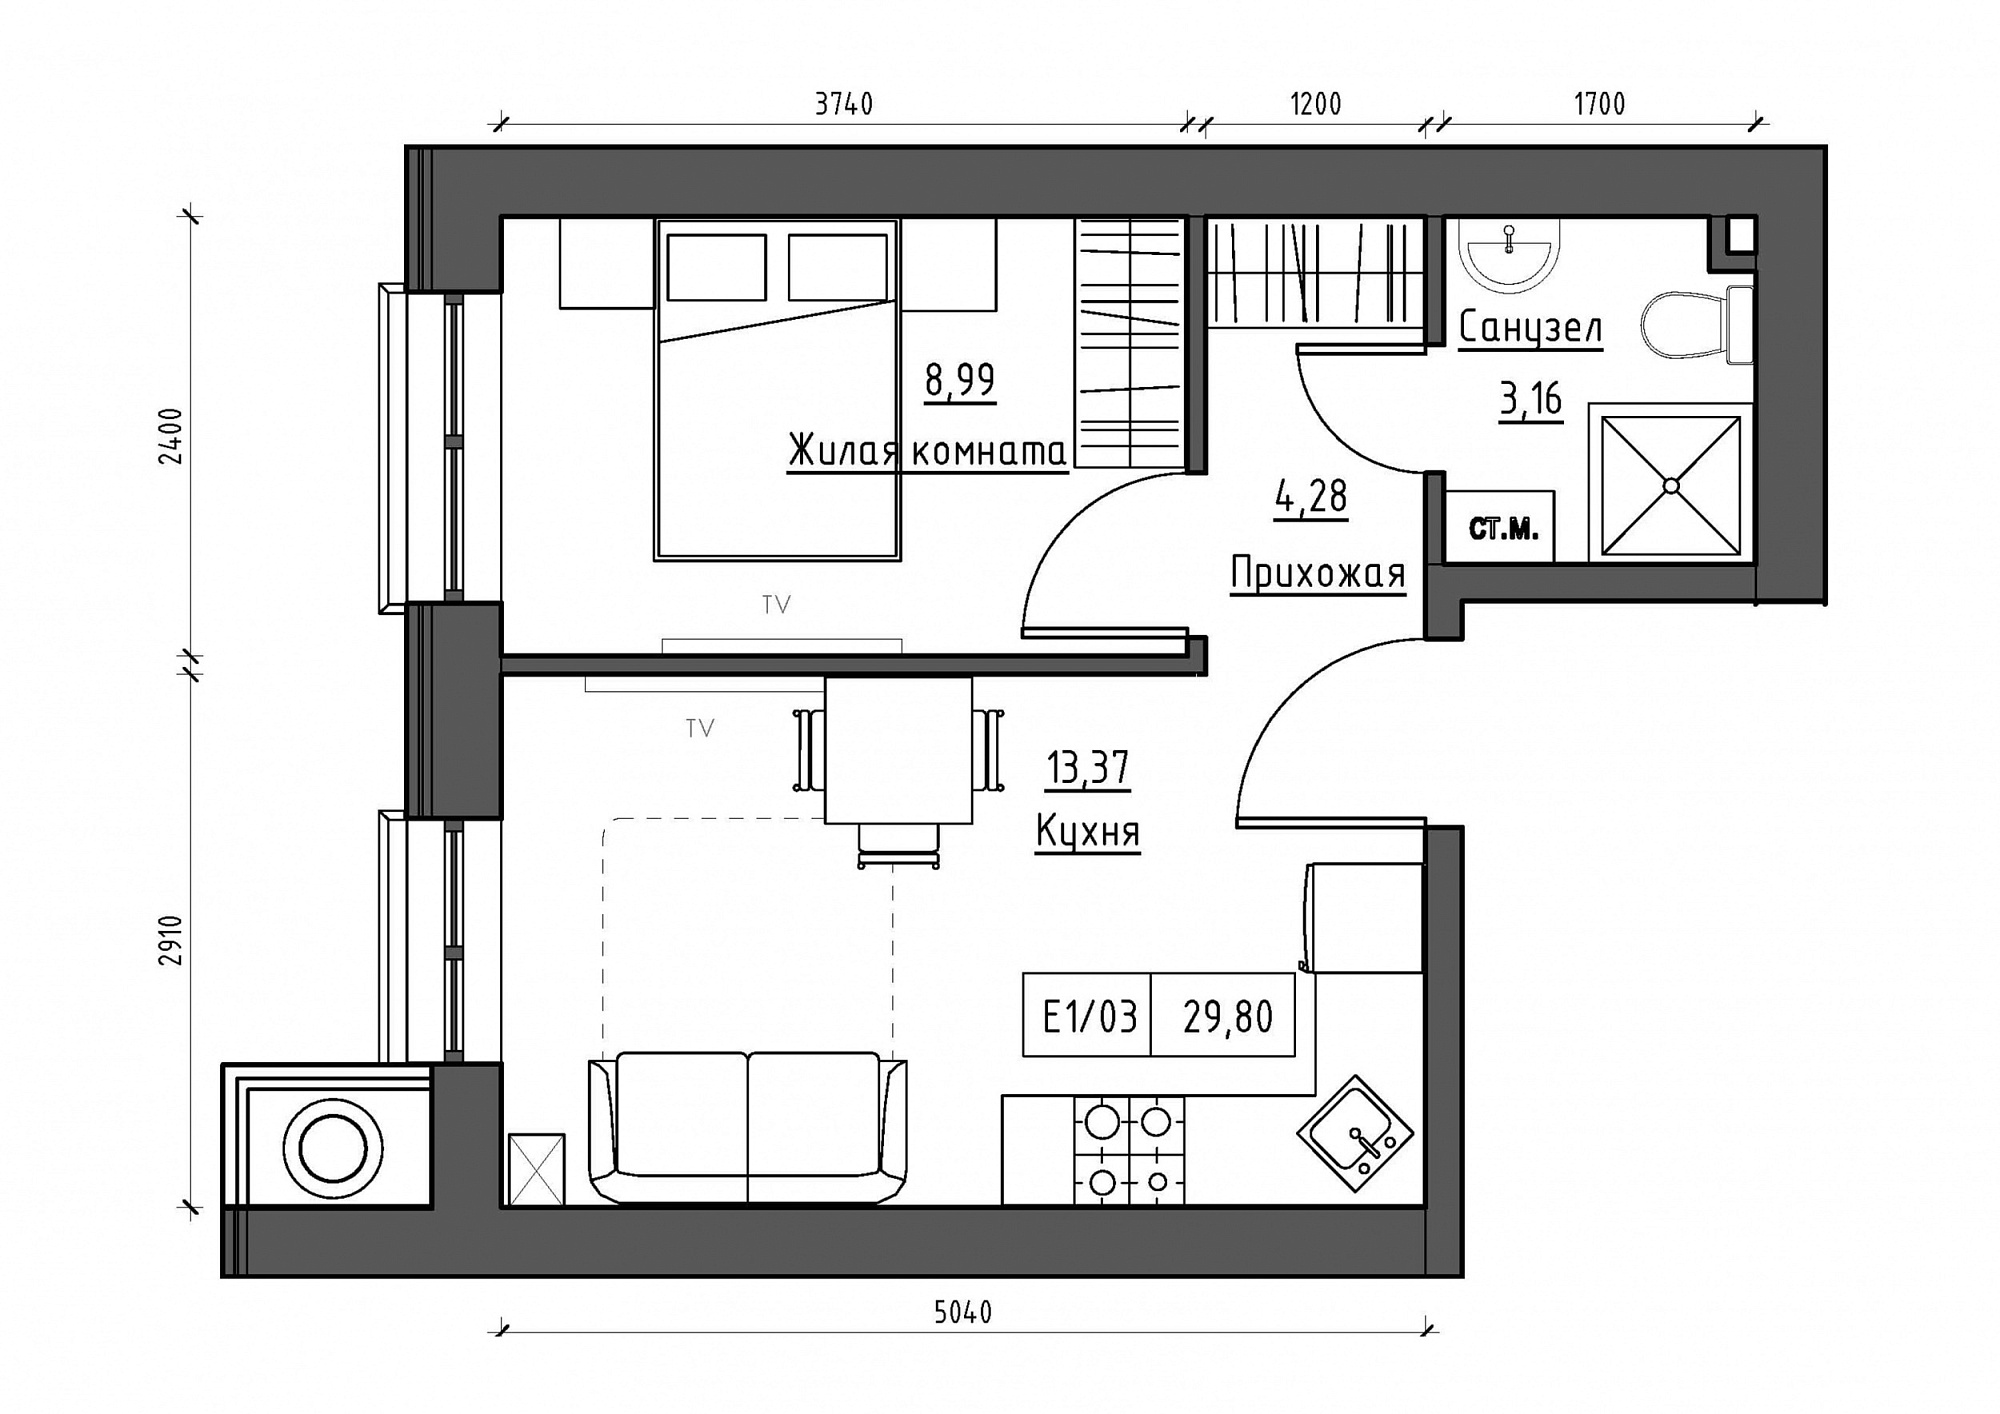 Planning 1-rm flats area 29.8m2, KS-011-01/0003.